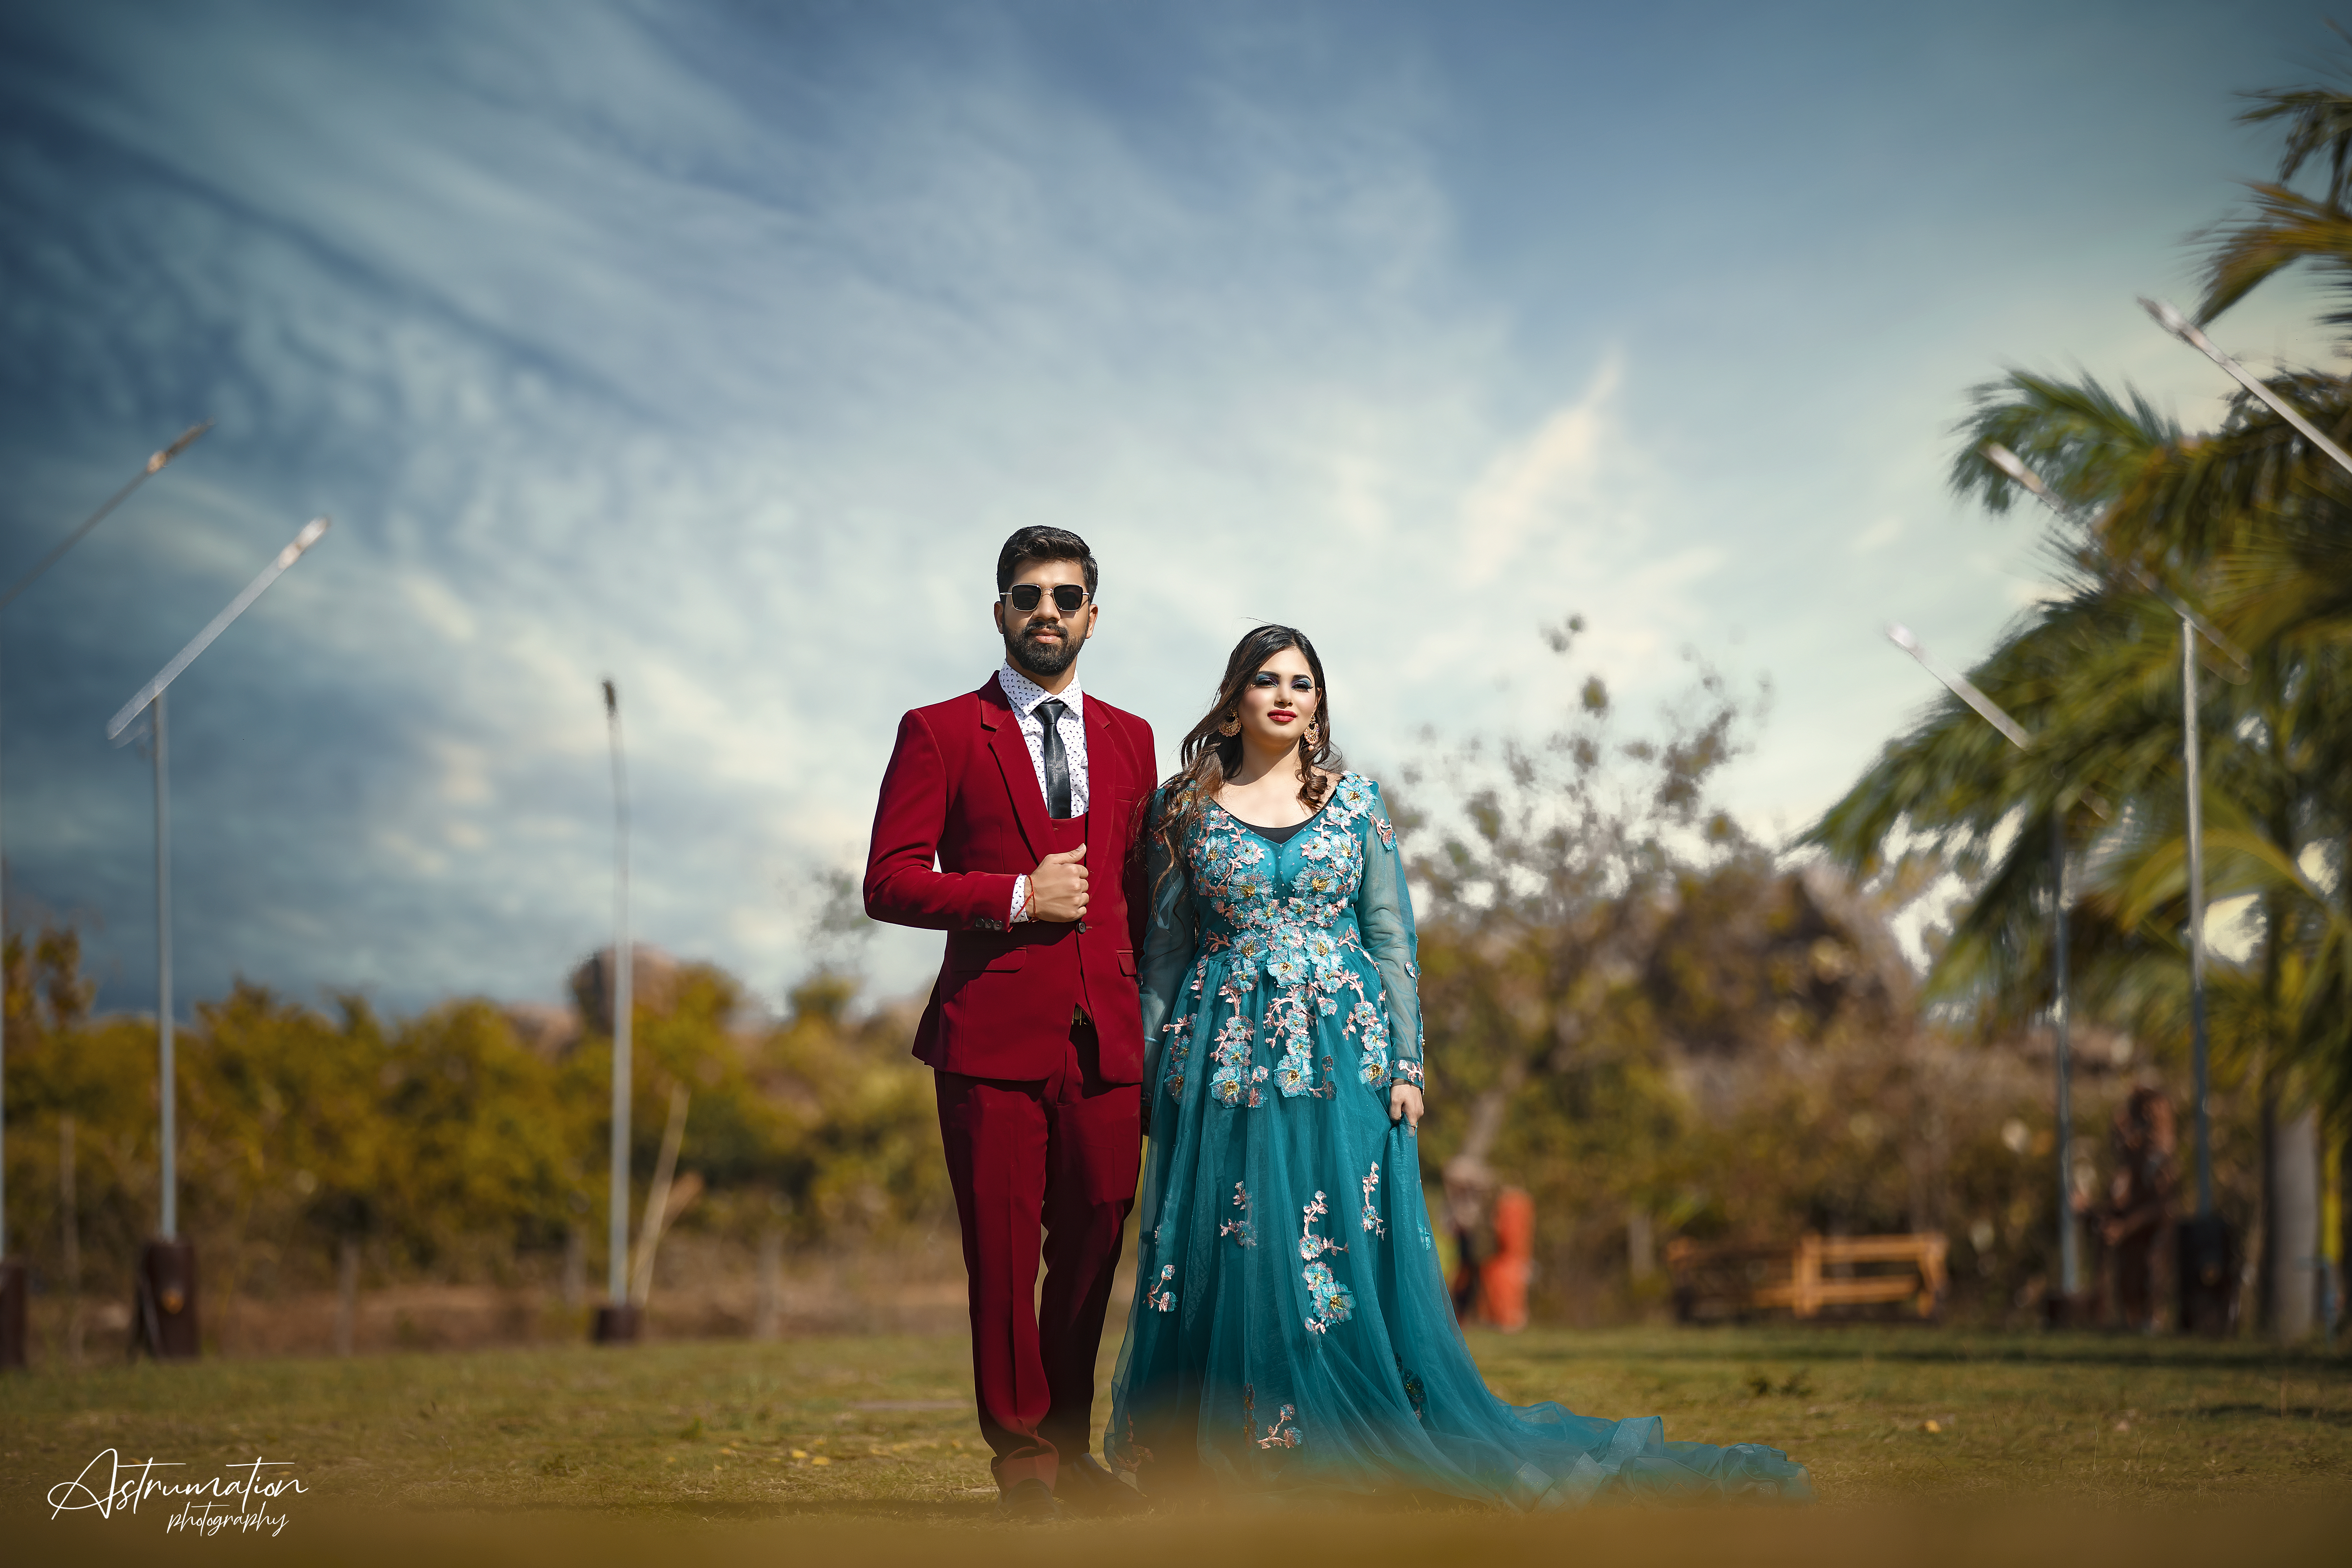 Top 61 Pre-Wedding Shoot Outfit Ideas - Gowns To Lehengas & More! |  WeddingBazaar